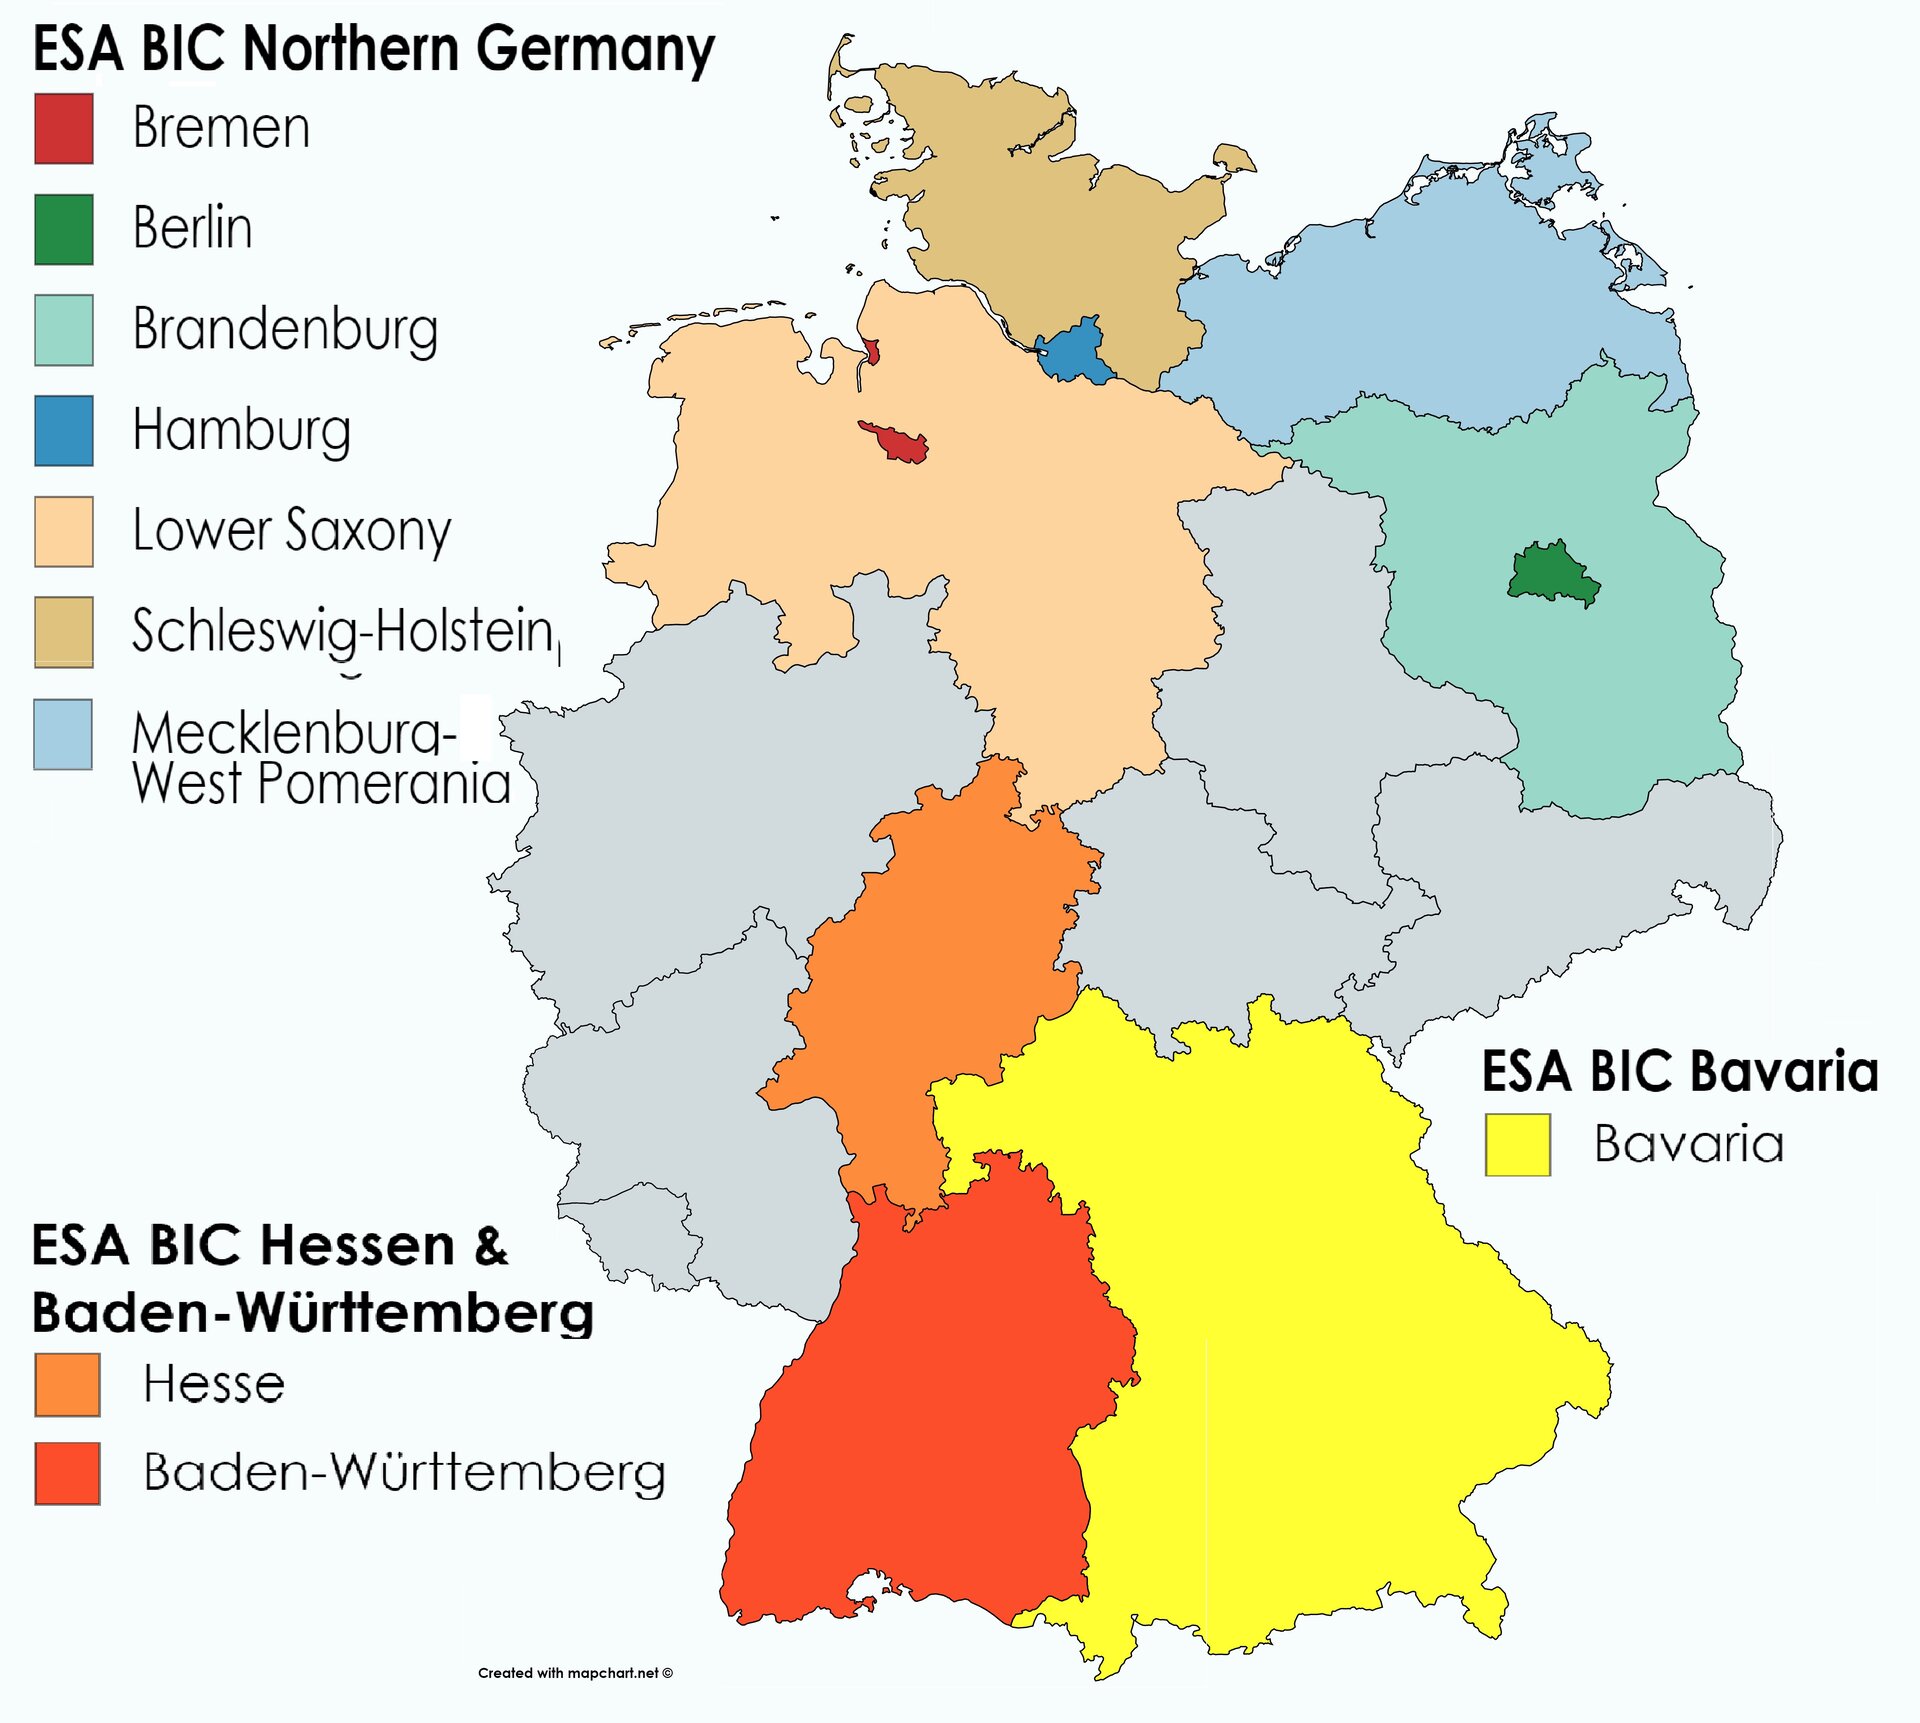 ESA BIC Hessen & Baden-Württemberg, ESA BIC Bavaria and ESA BIC Northern Germany